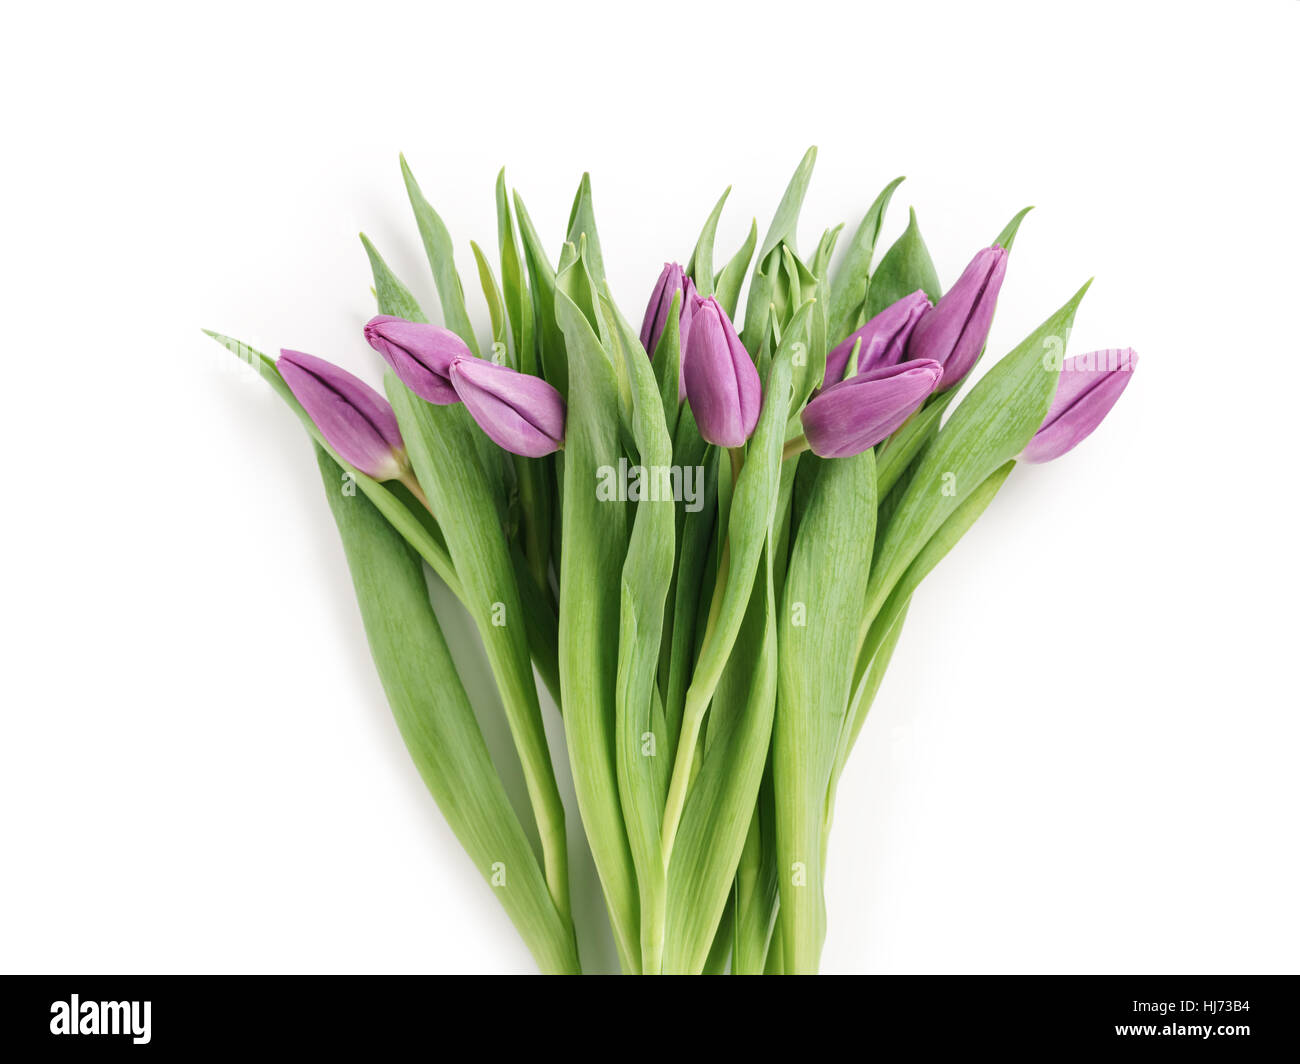 Frescos tulipanes púrpura disparó desde arriba aislado en blanco Foto de stock